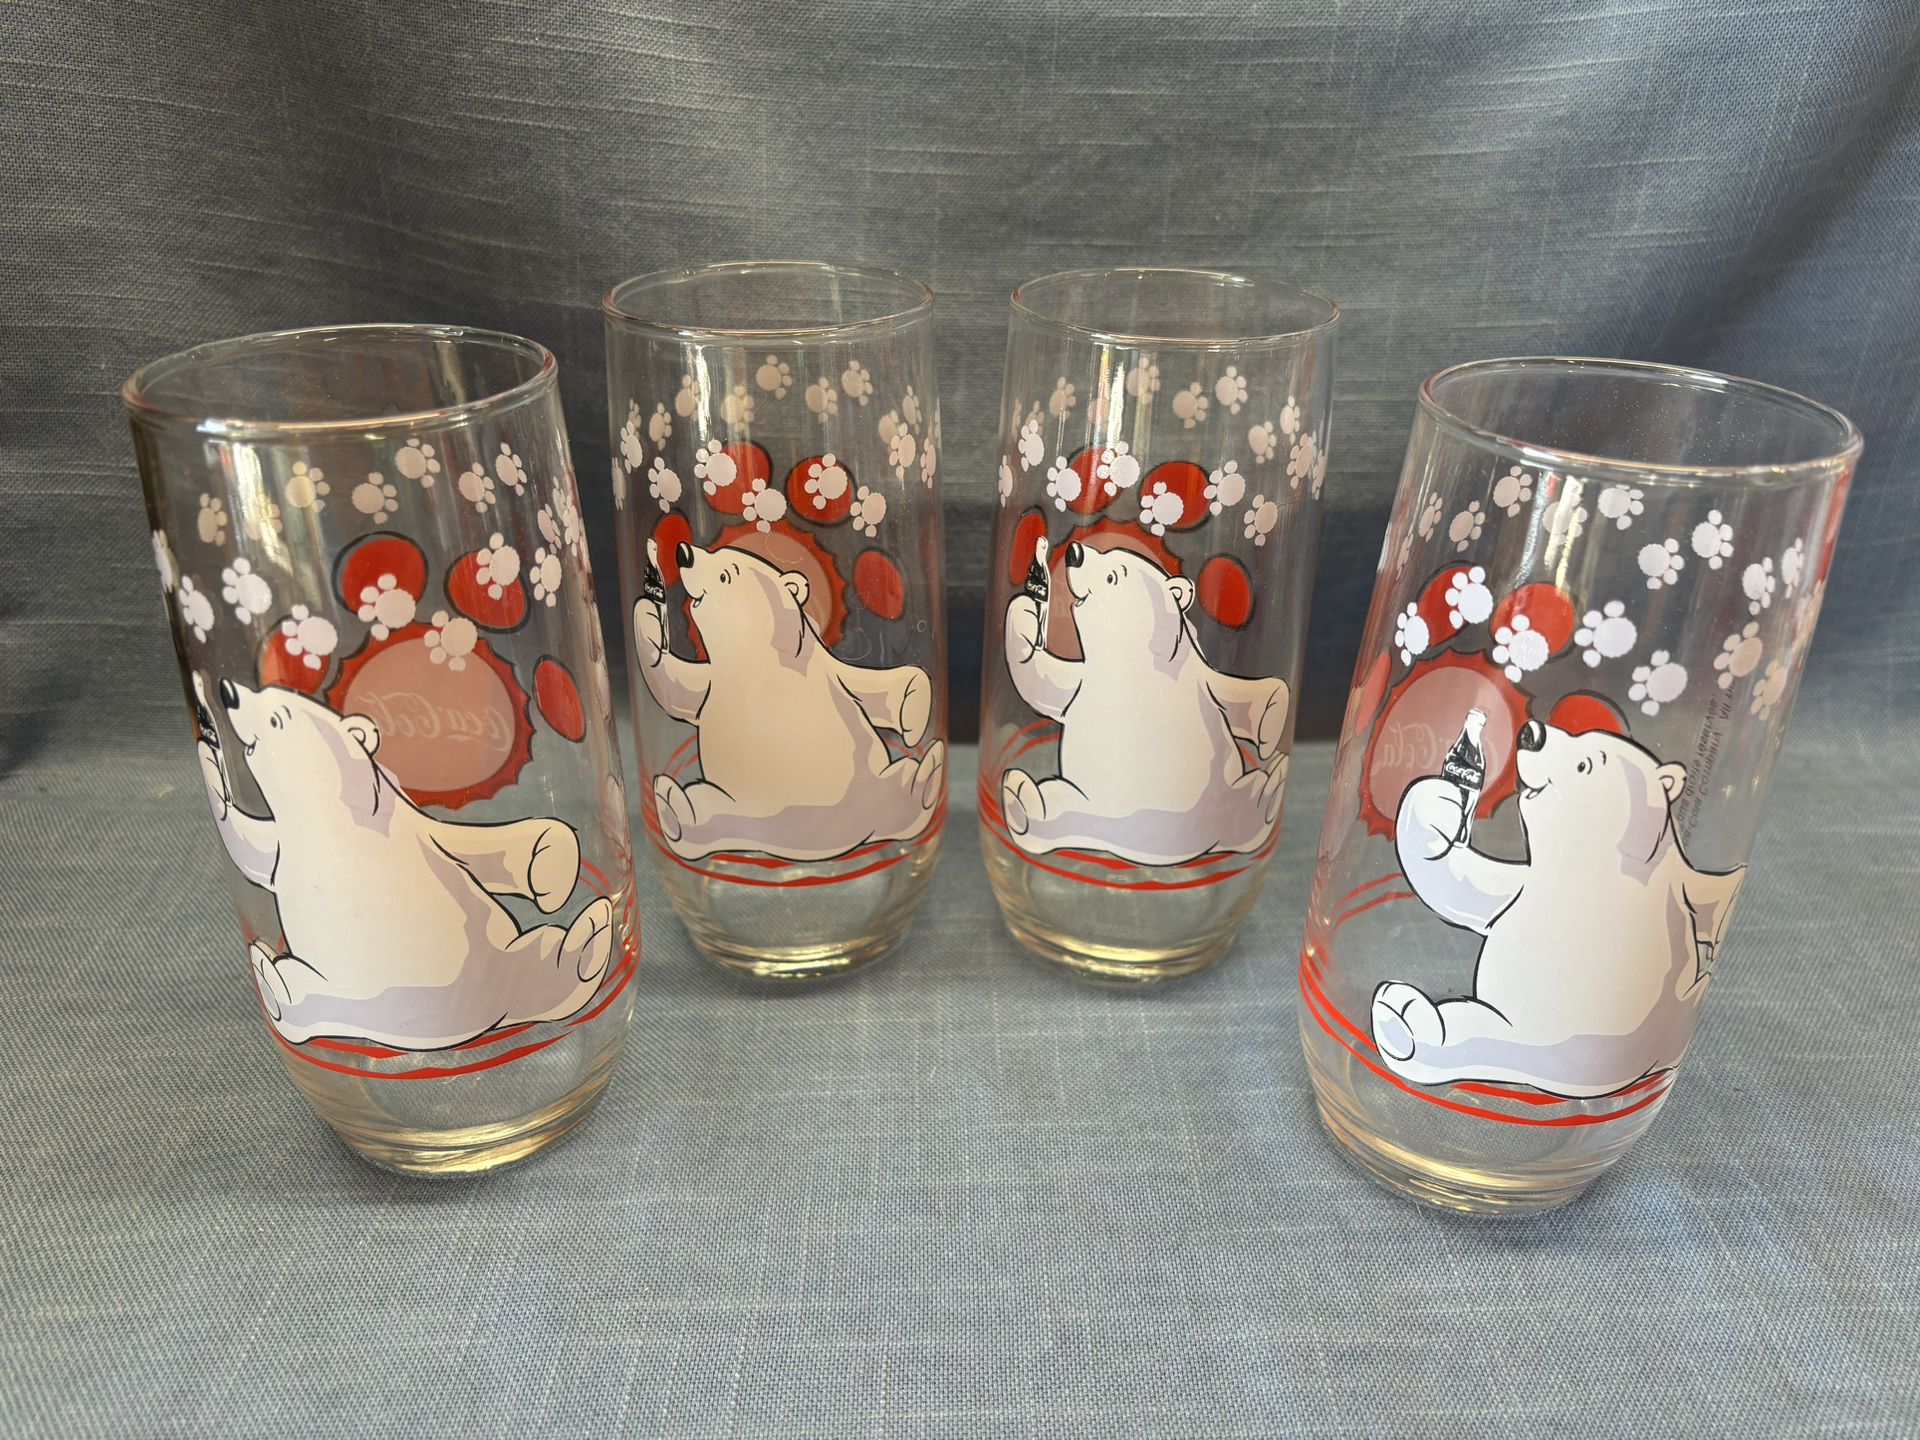  Vintage “Coca-Cola Polar Bear” Glasses (1999) Set of 4 - Great Condition! 